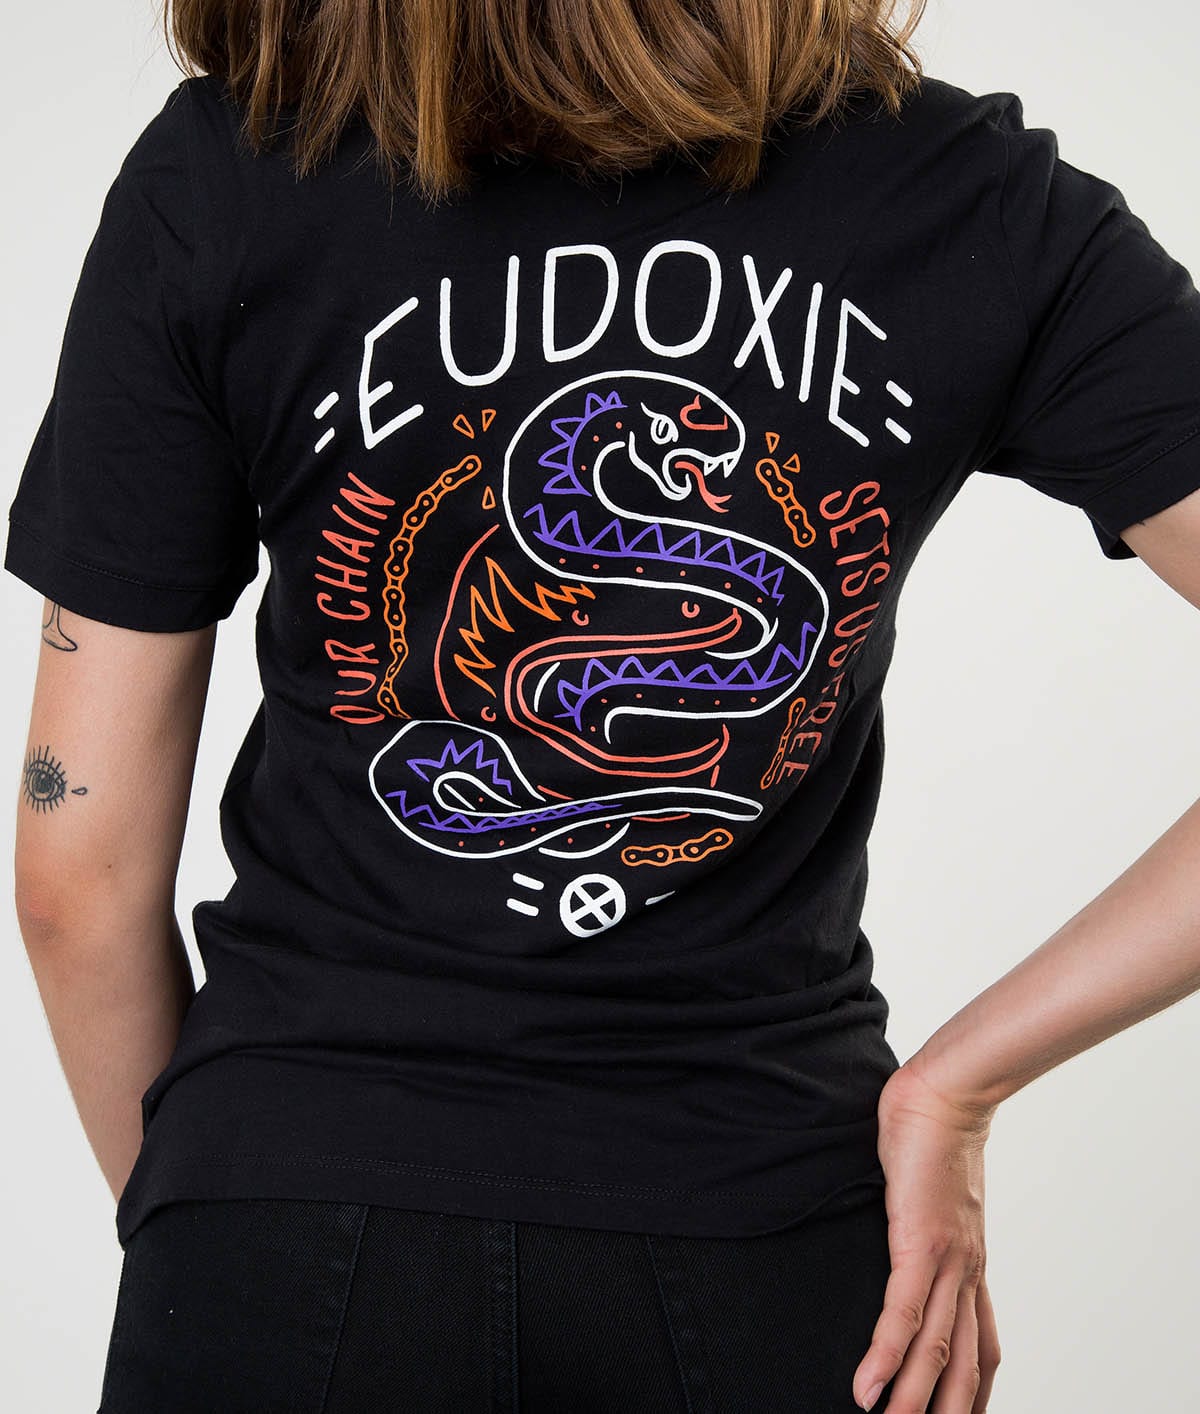 Eudoxie Black Masha T-Shirt - Small - Bild 4